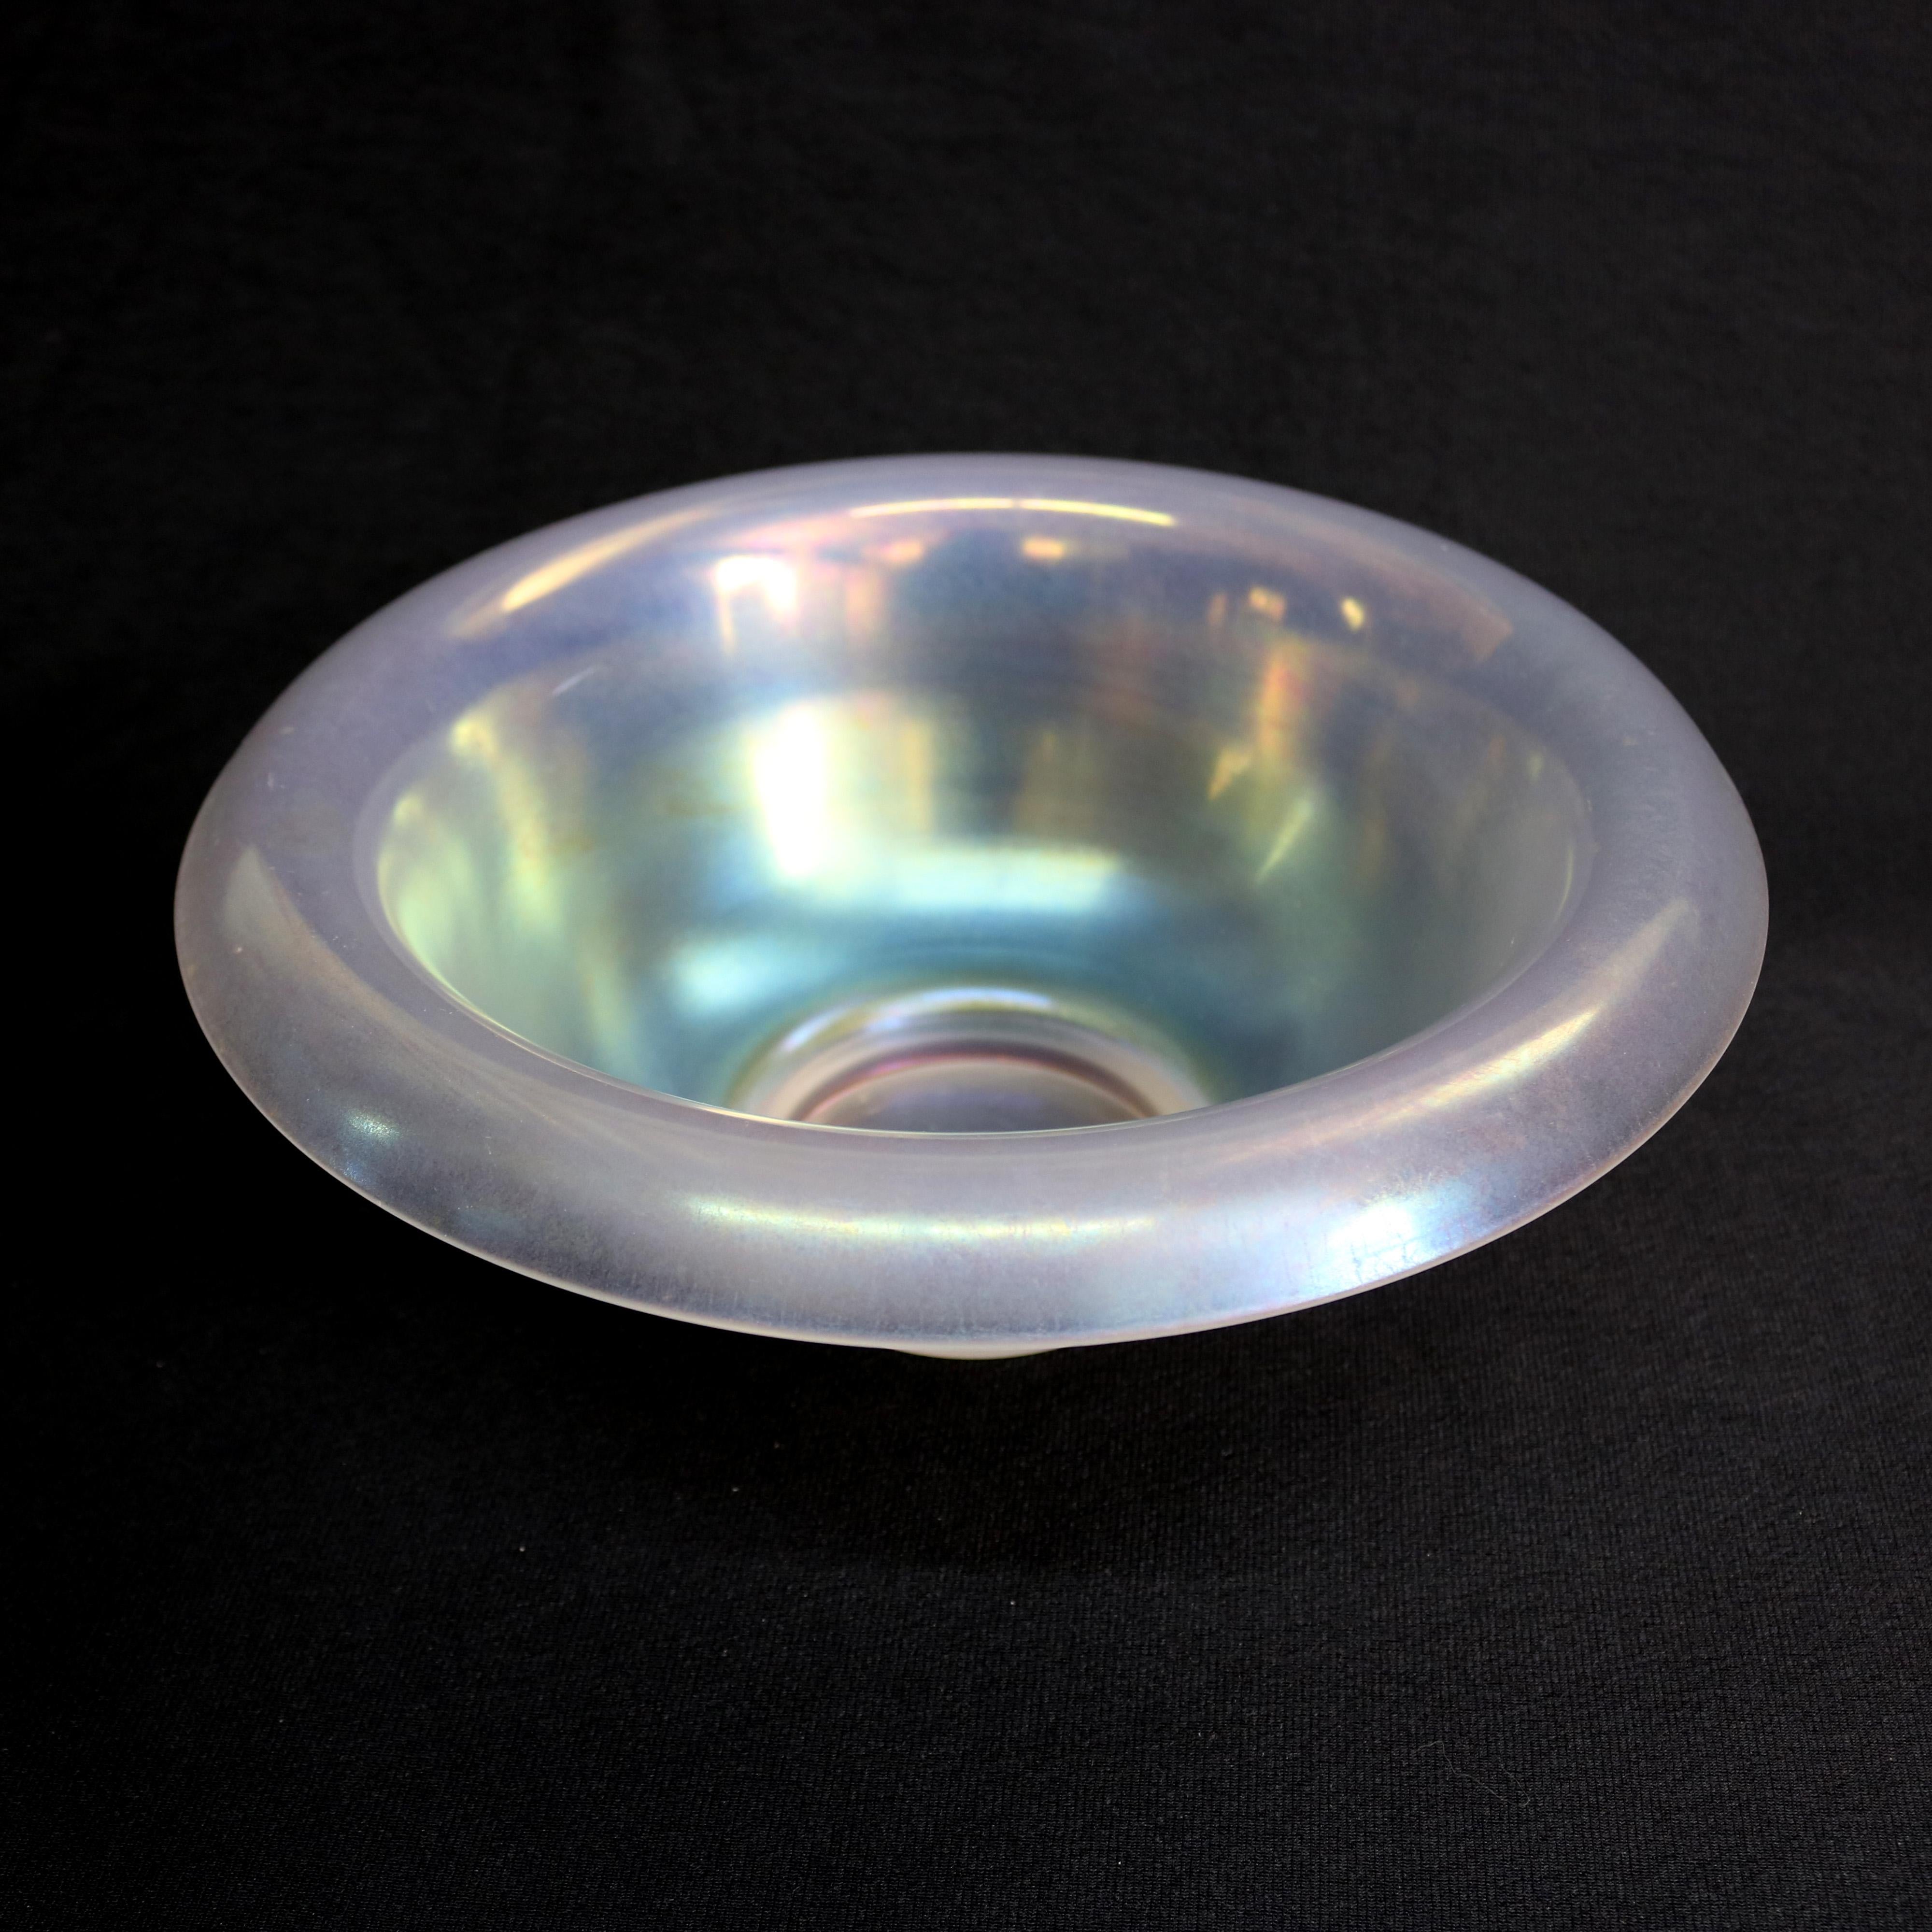 A vintage Steuben art glass Verre De Soie center bowl offers curved rim and iridized finish, circa 1950

Measures: 4.5